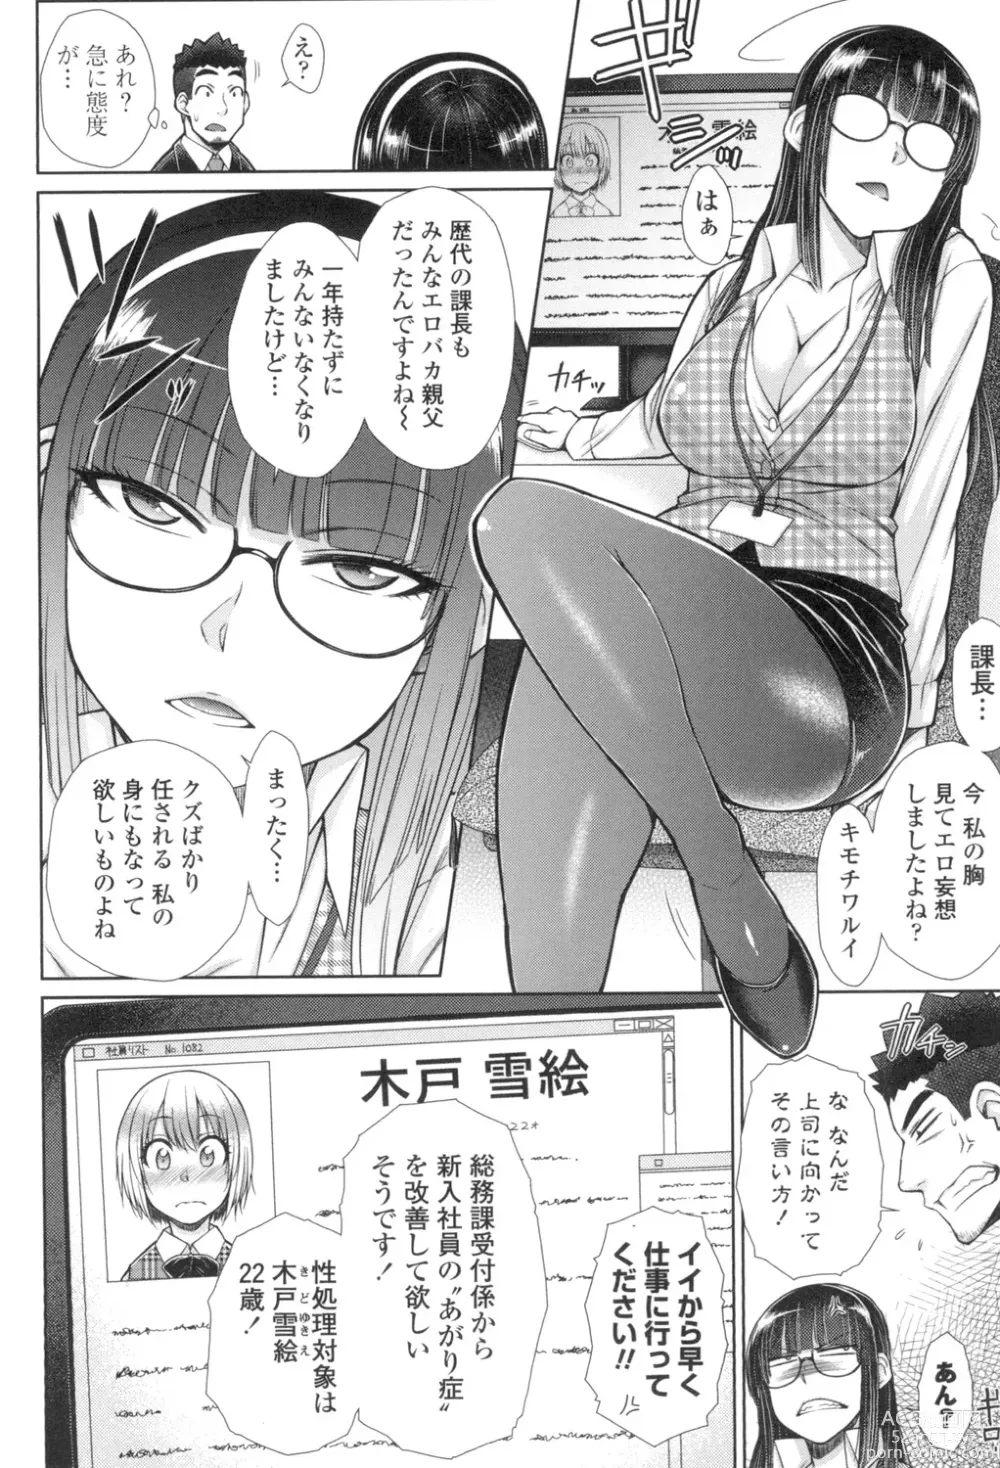 Page 27 of manga Kochira Joshi Shain Senyou Seishorika - Sex Industry Division for Womens Employees Dedicated